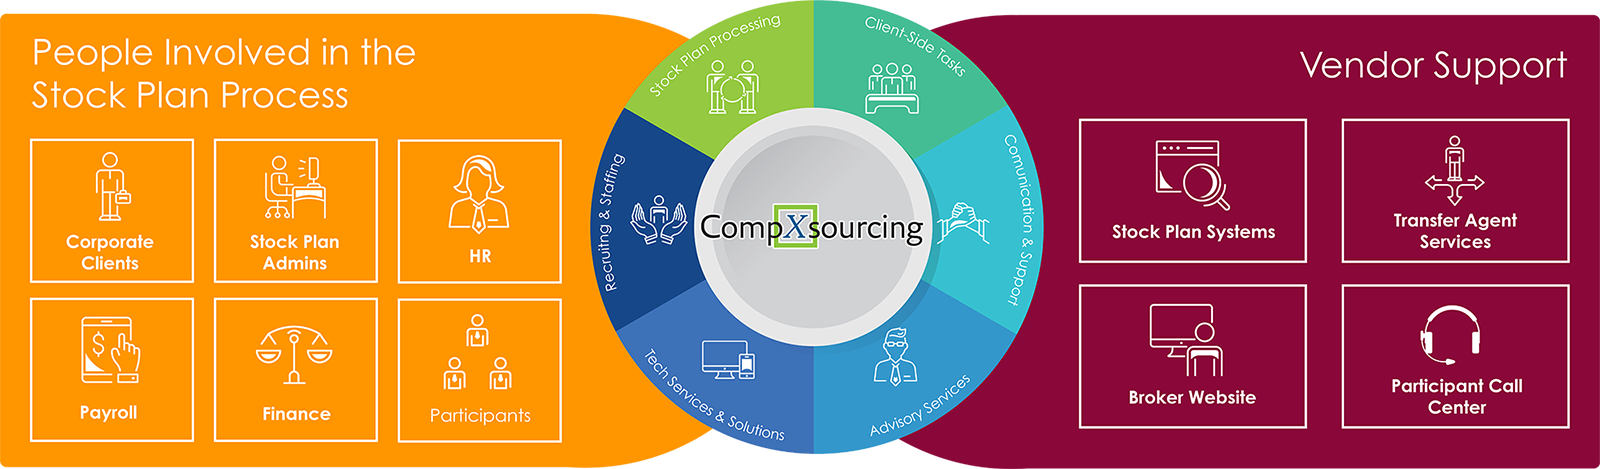 compxsourcing-diagram